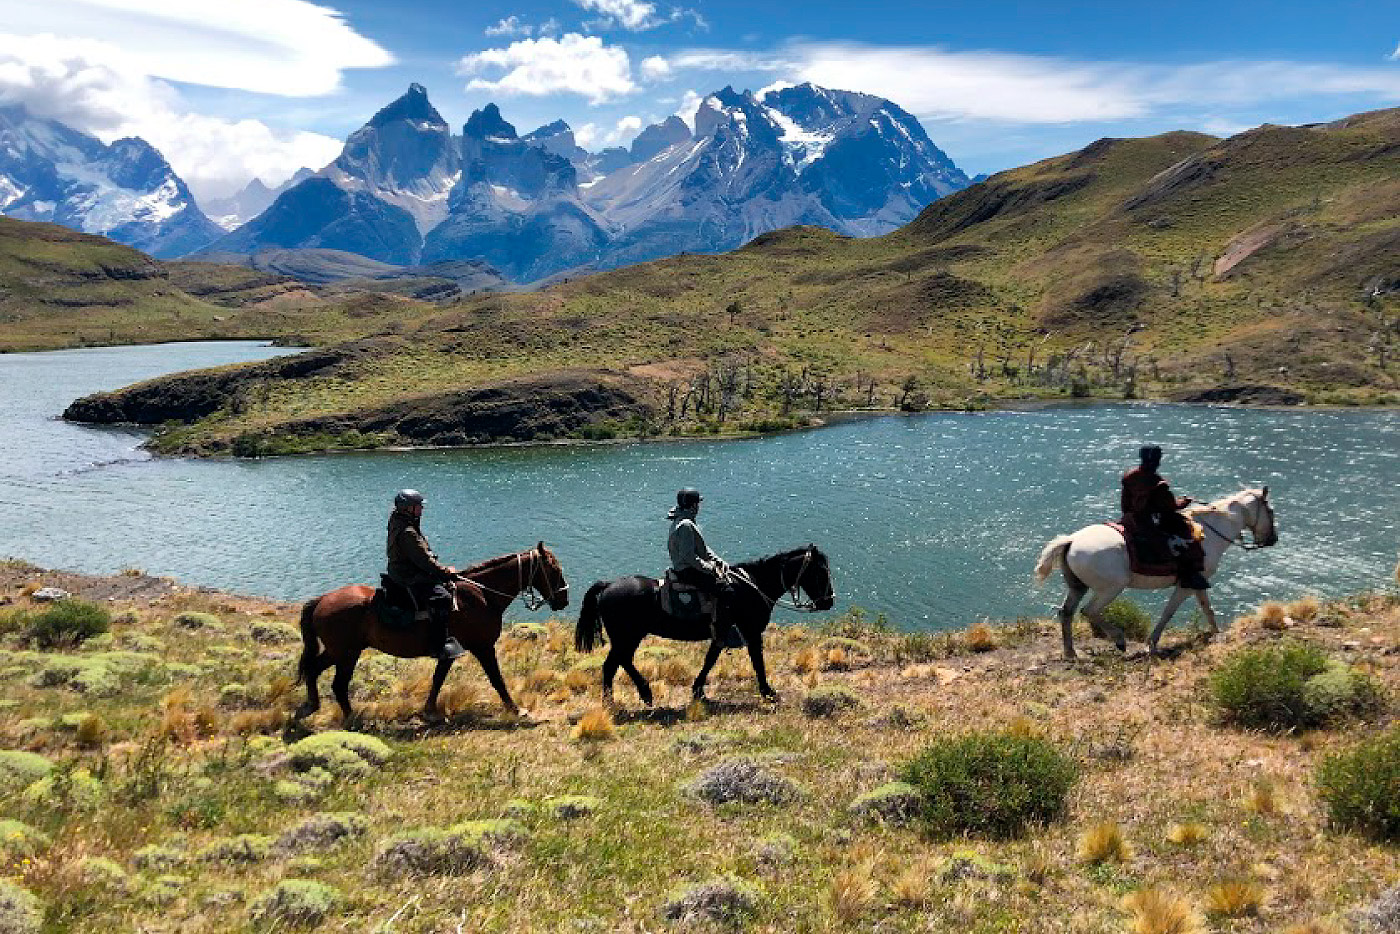 Horseback Riding In Torres Del Paine National Park